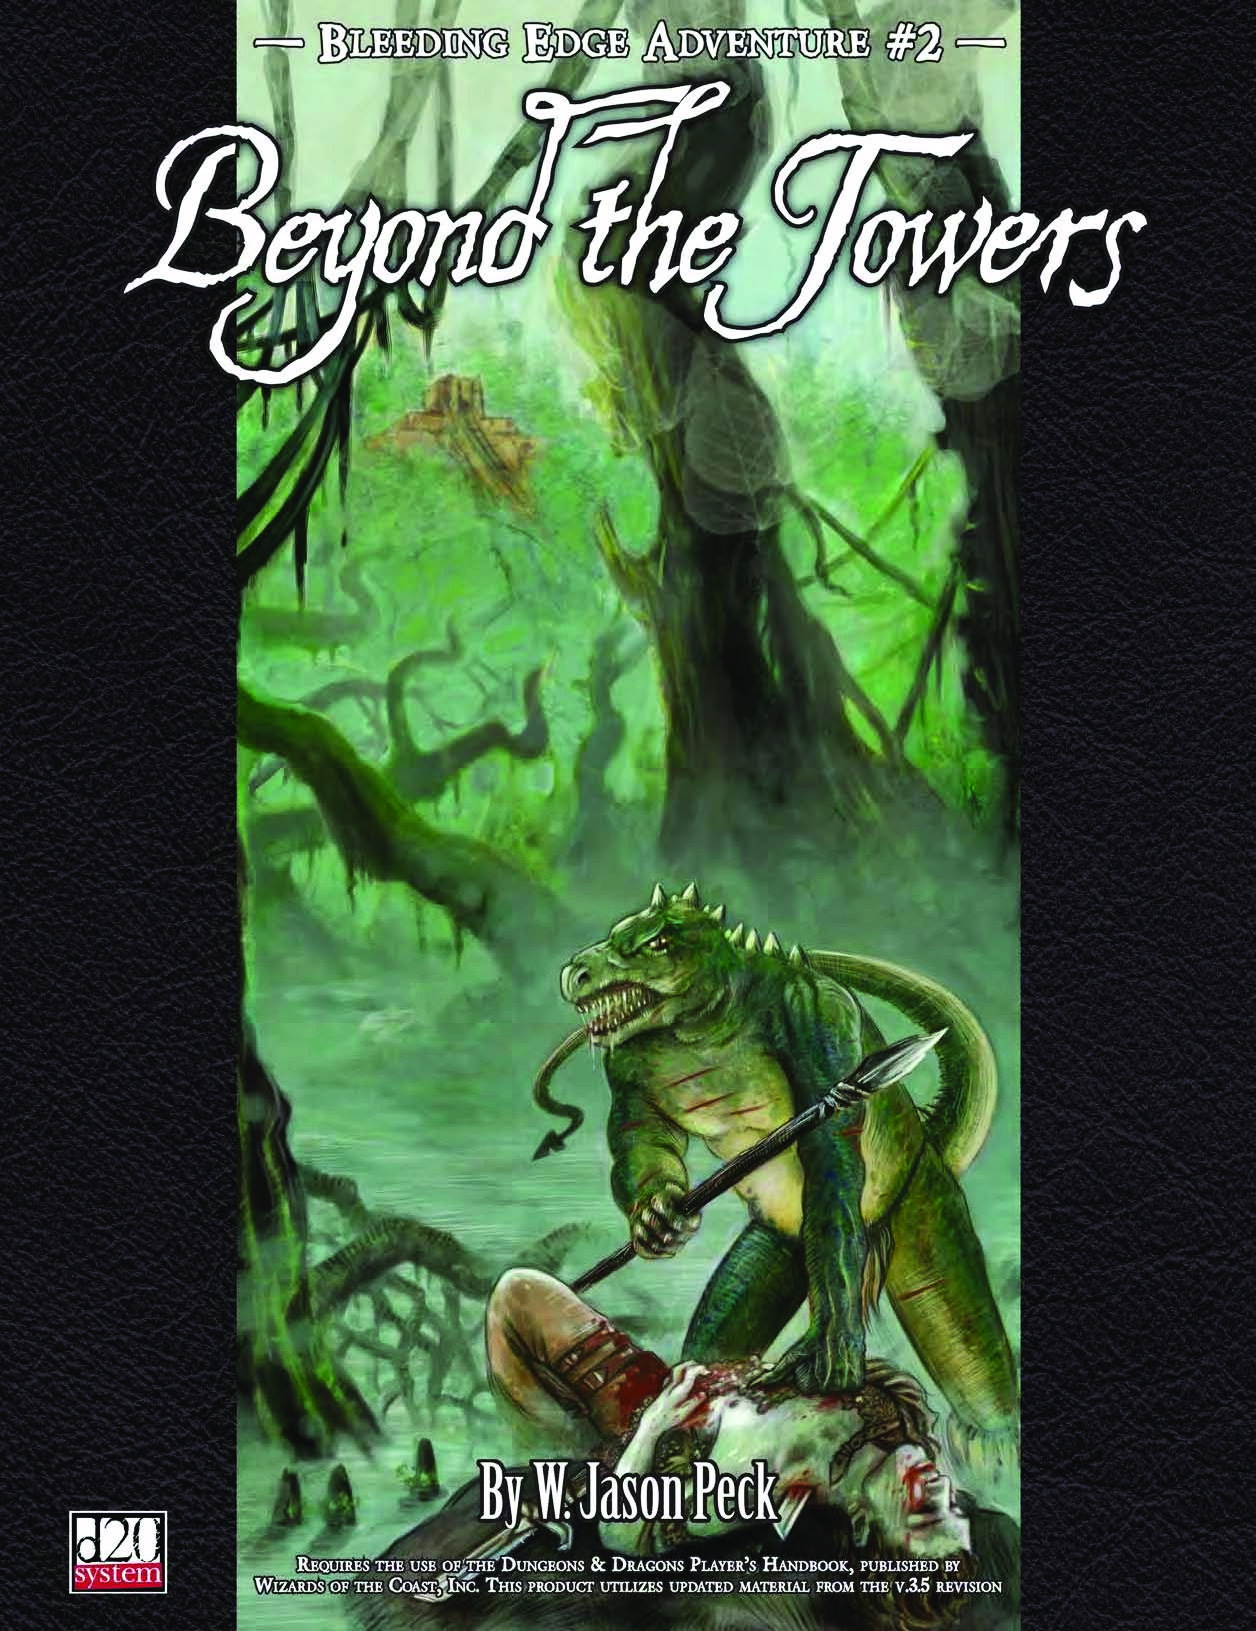 Beyond the Towers (Bleeding Edge Adventure #2)